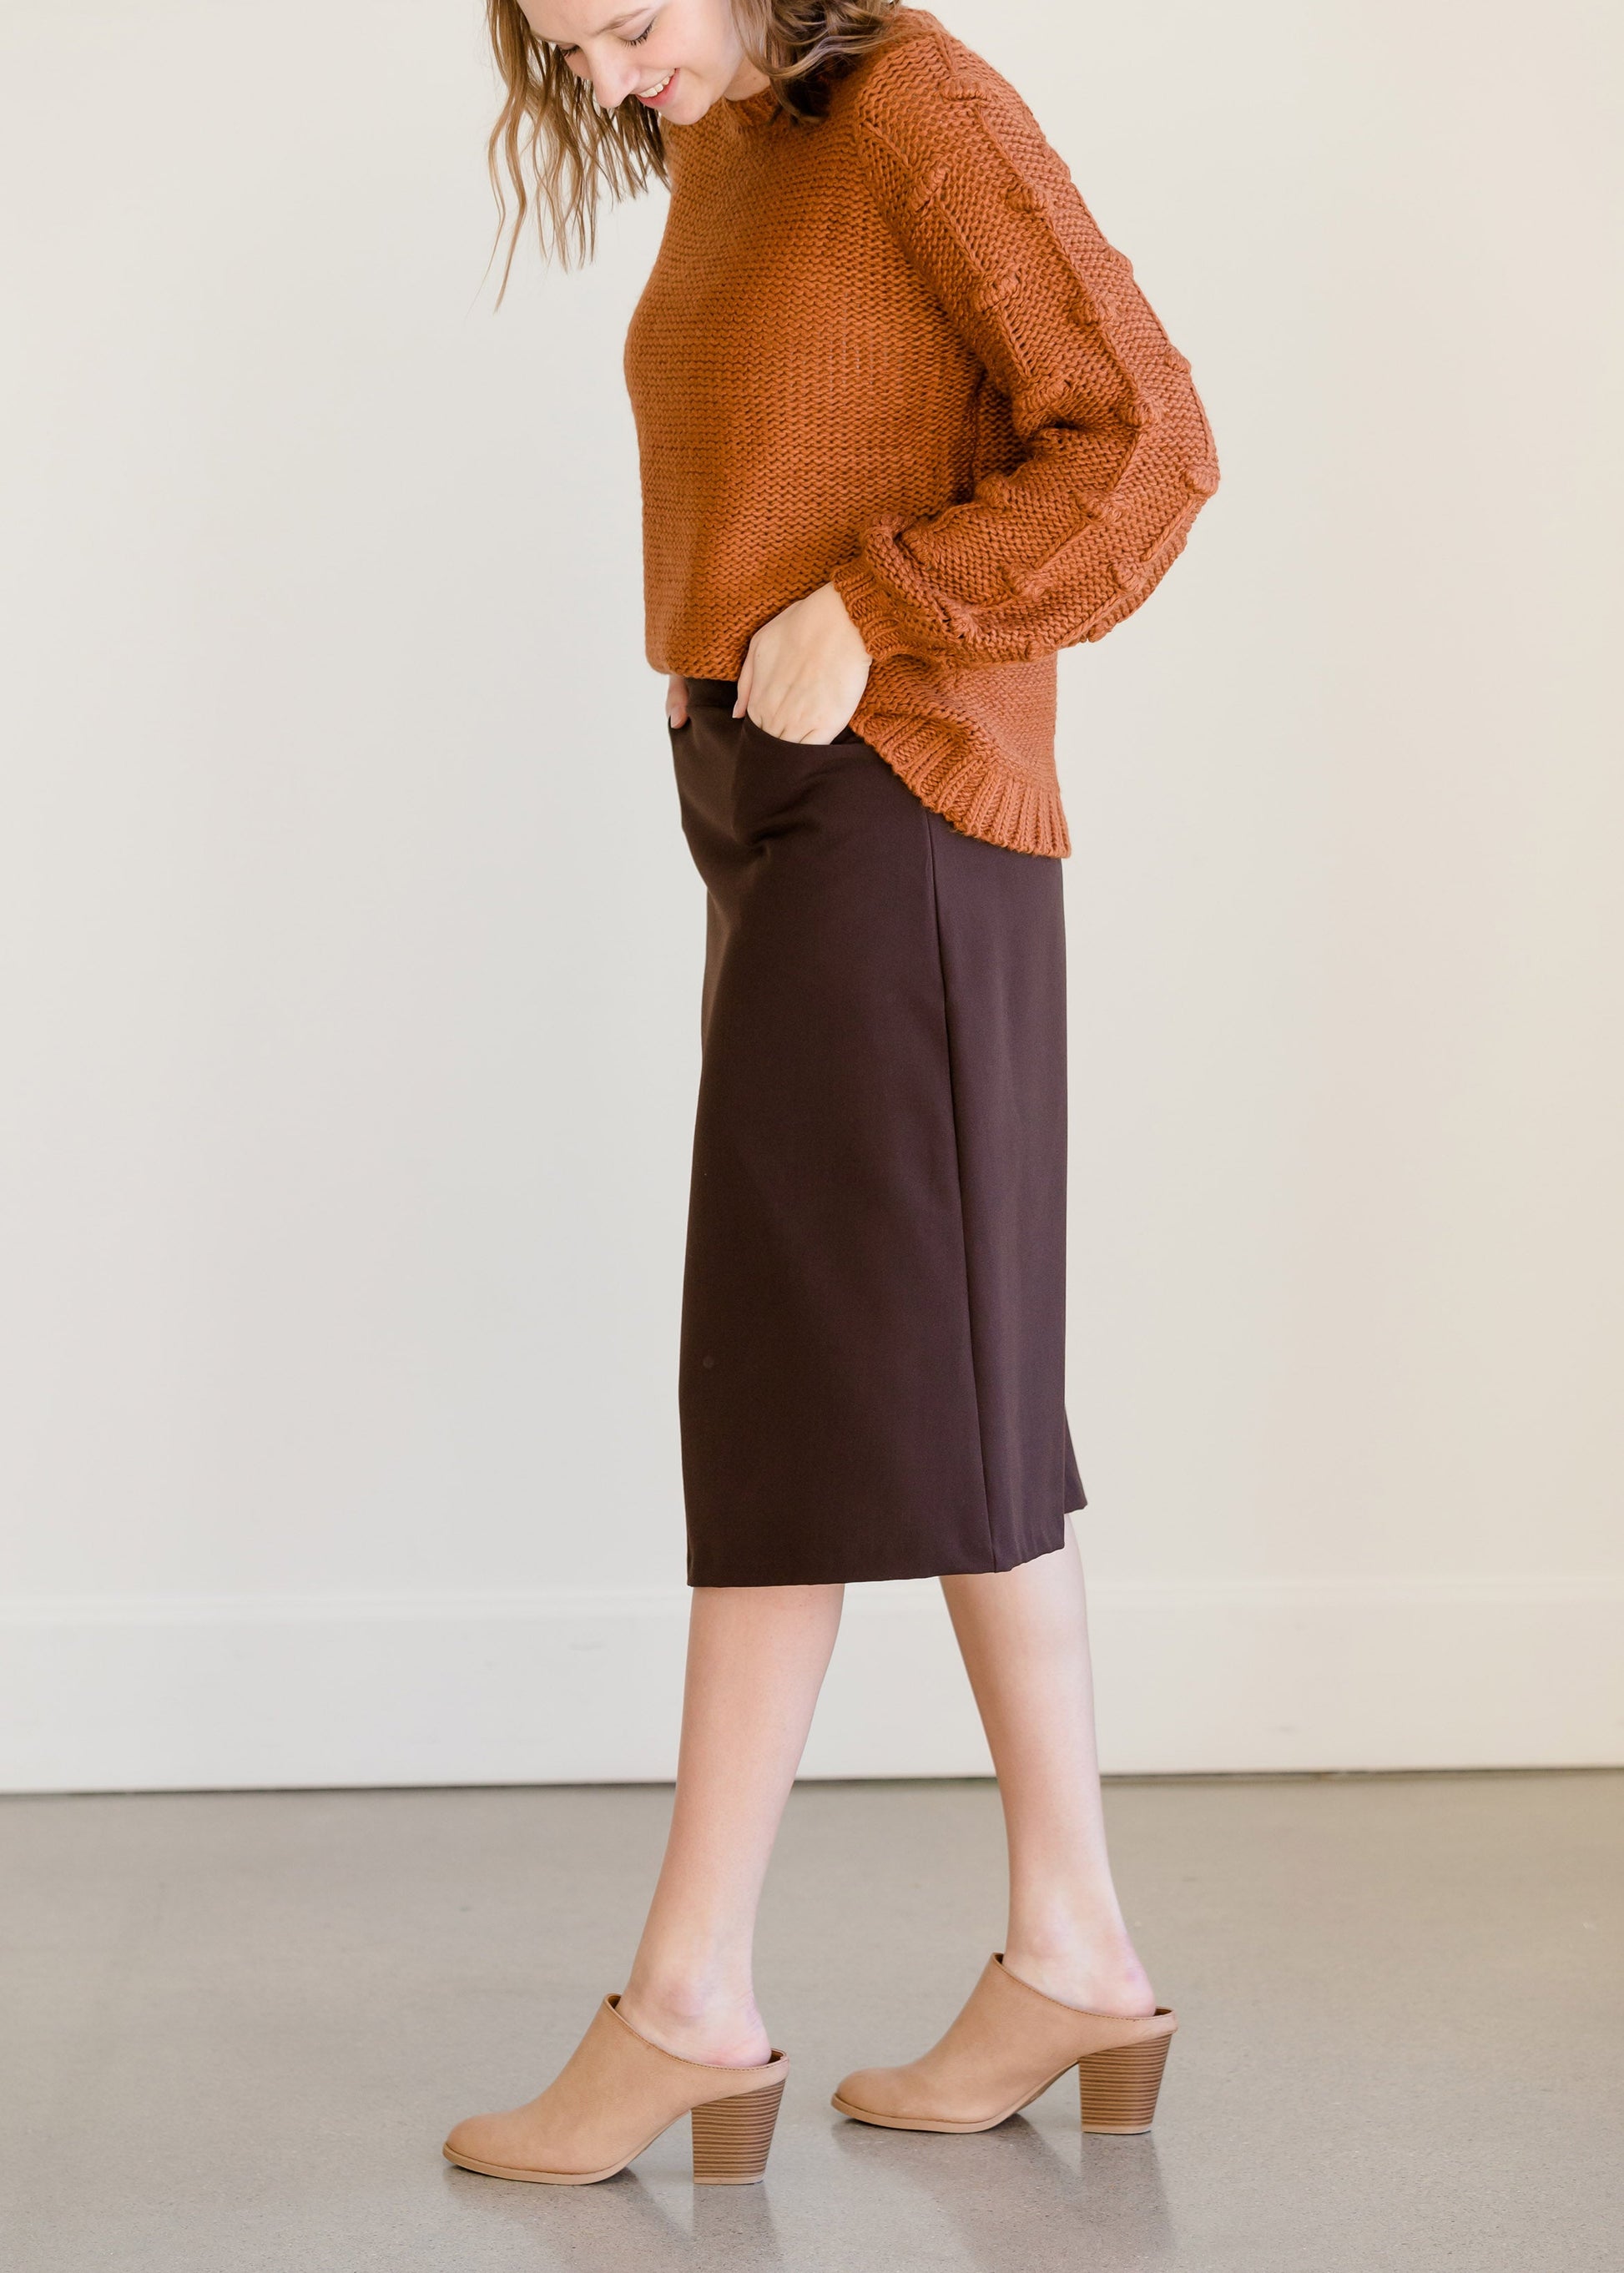 Dressy Back Zip Midi Skirt - FINAL SALE Skirts